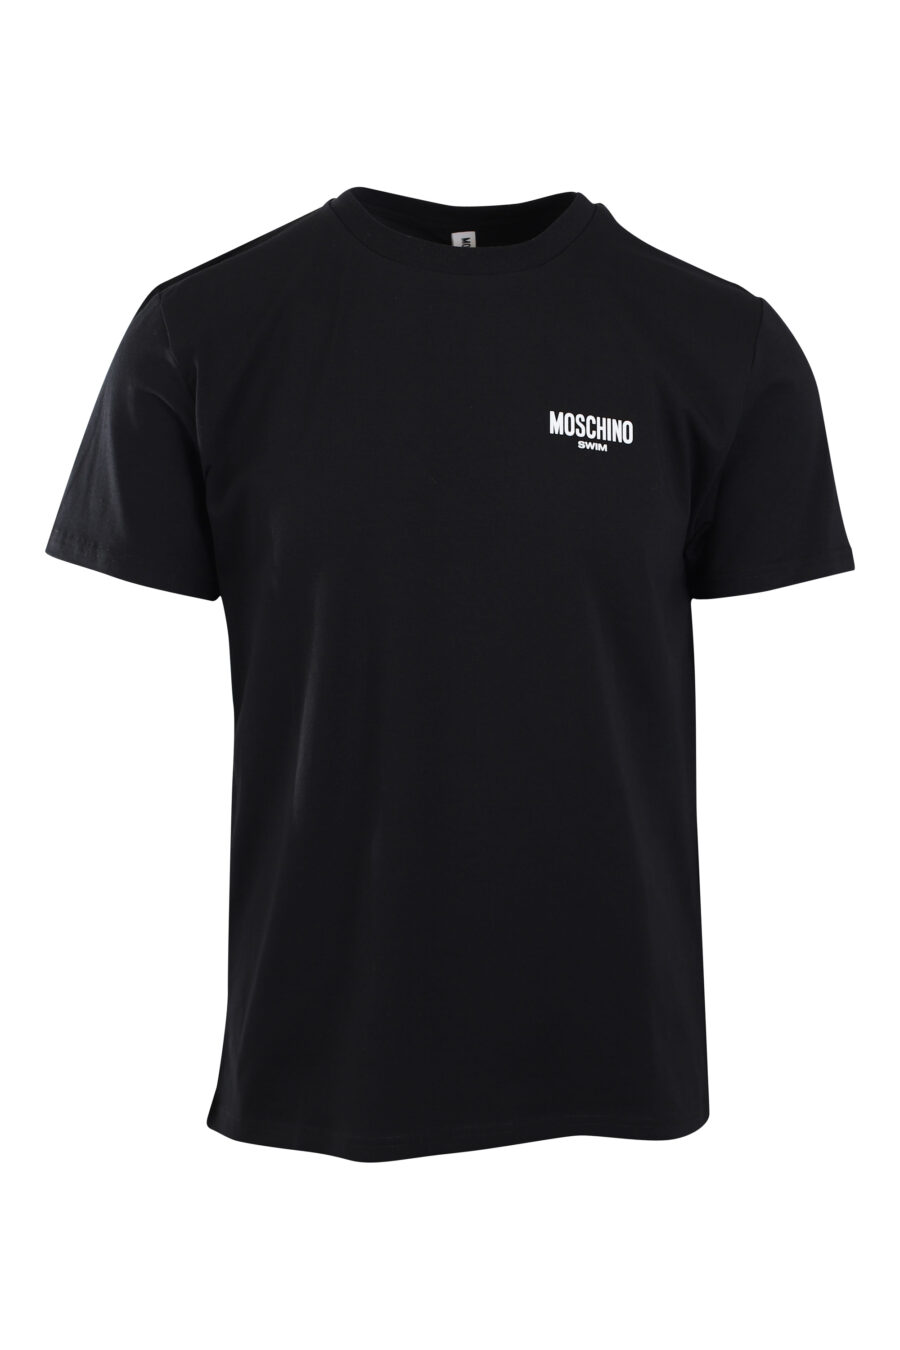 Camiseta negra con mini logo "swim" - IMG 2188